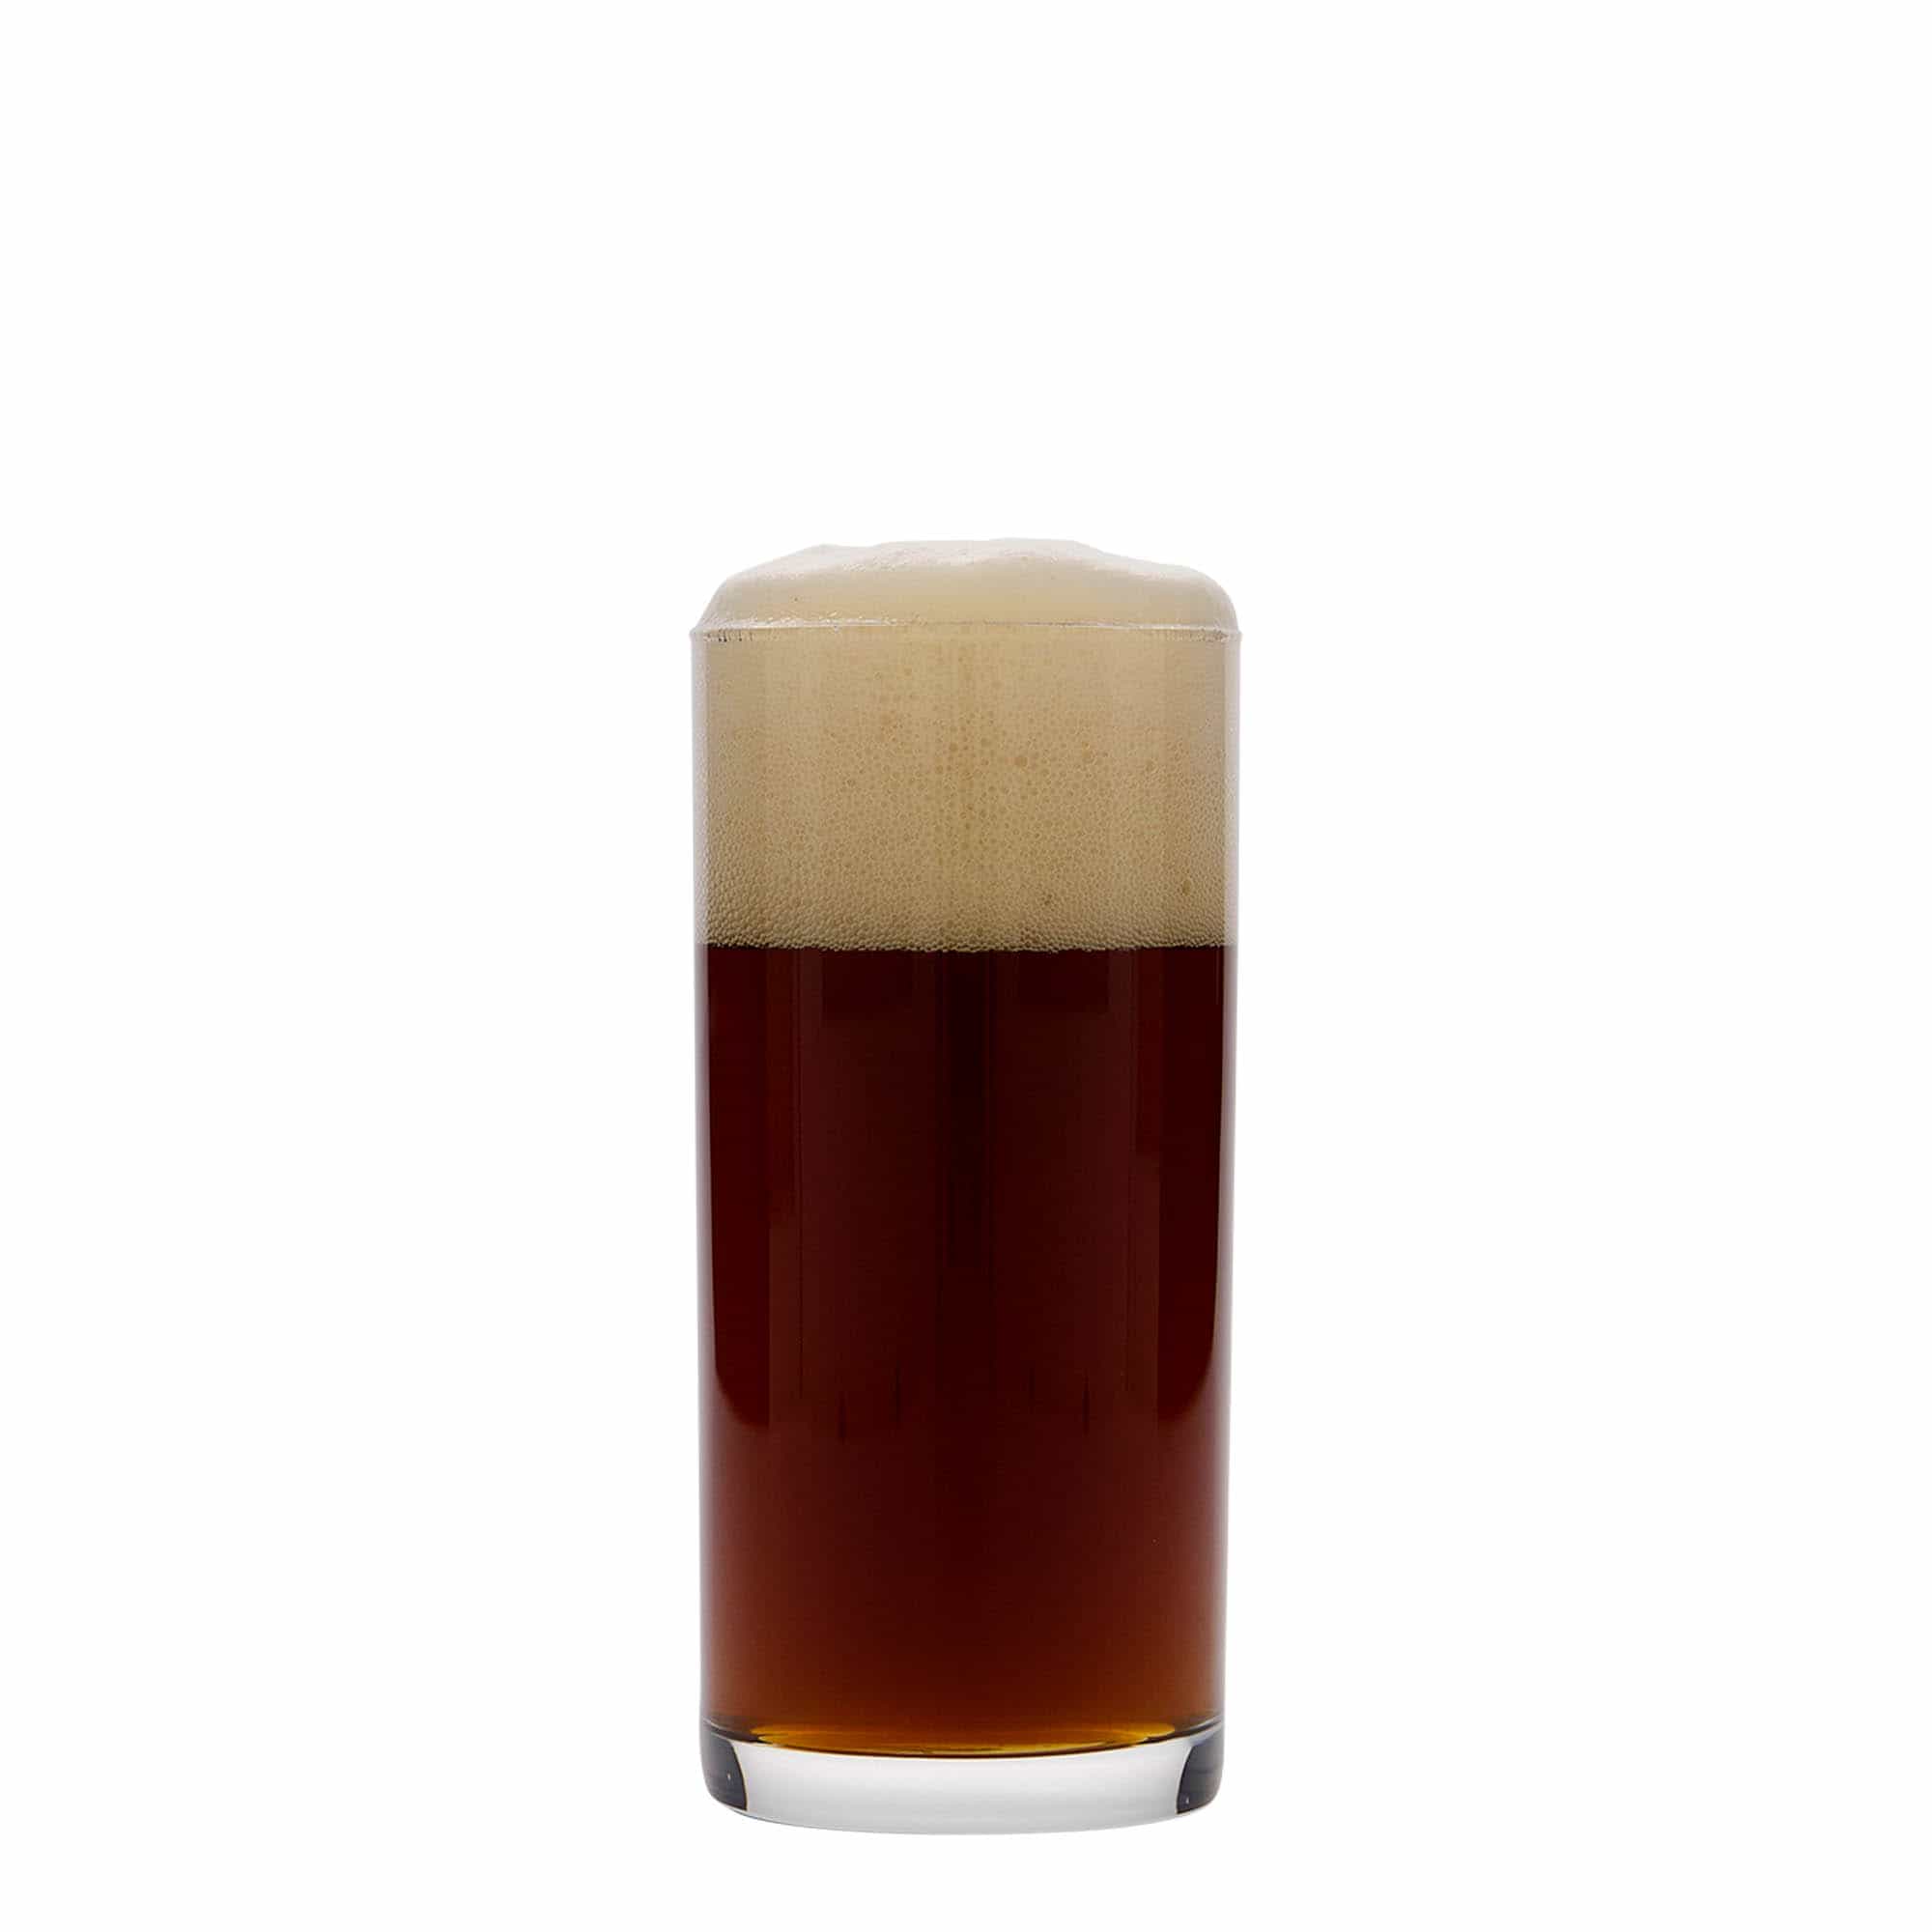 Drinkglas 'Altbier', 200 ml, glas